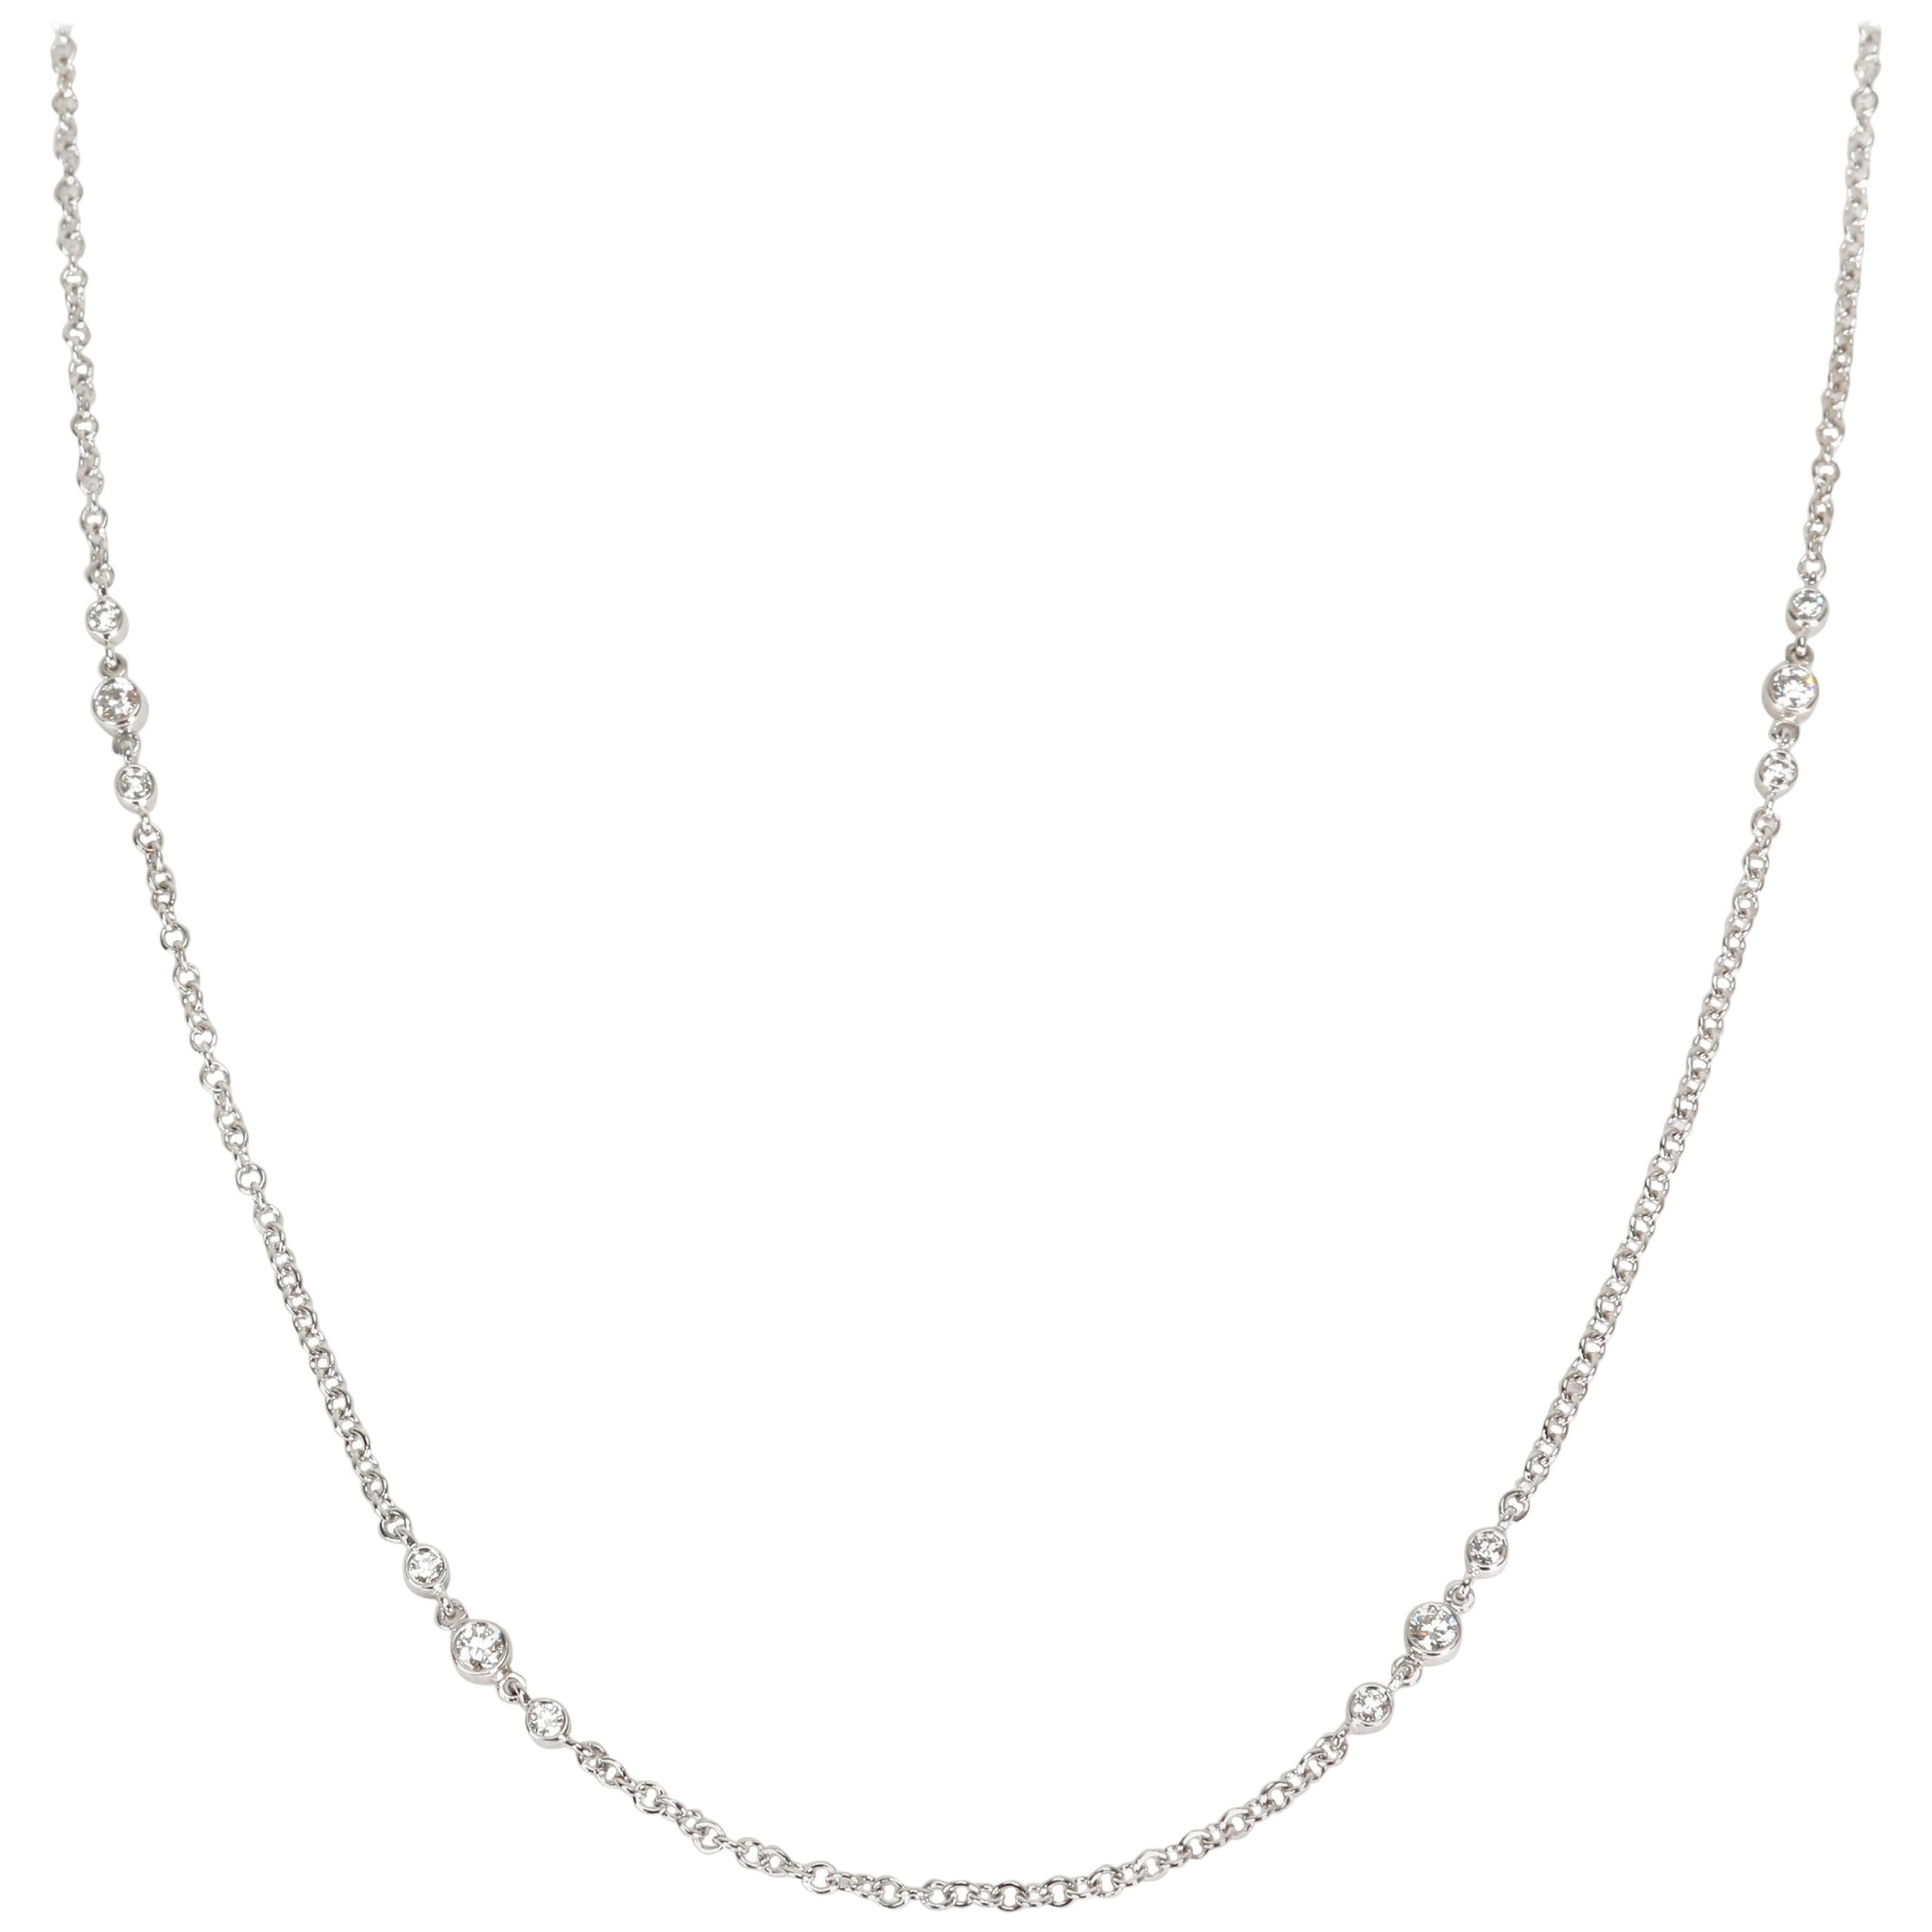 Tiffany & Co. 8 Station Diamond Necklace in Platinum 0.56 Carat